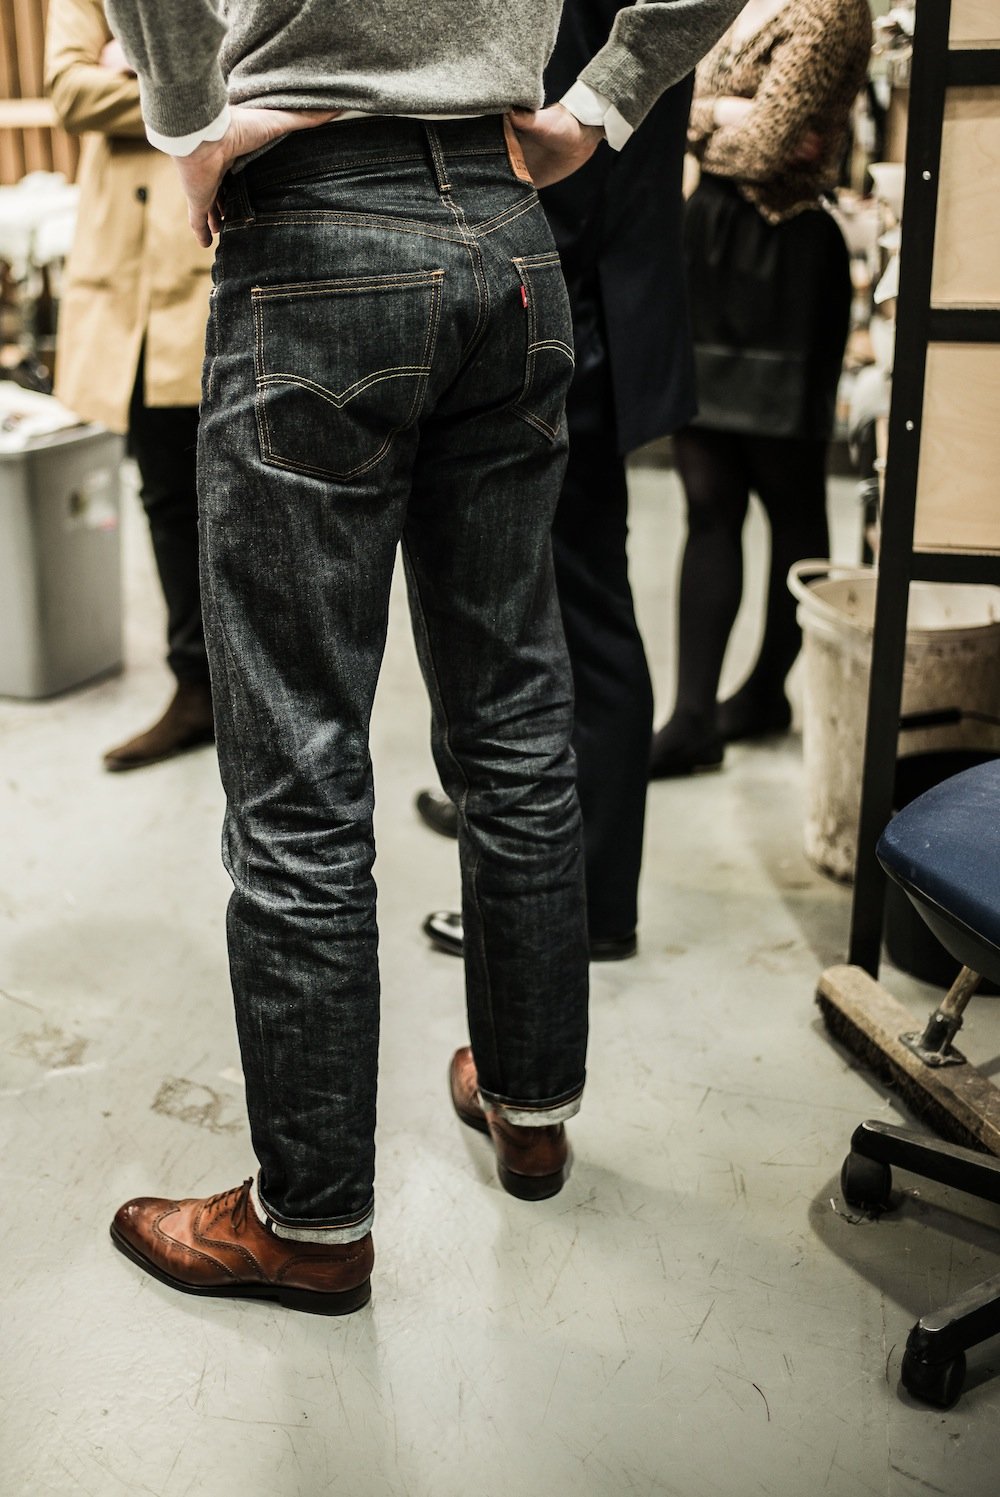 Levi's final bespoke jeans – Permanent Style